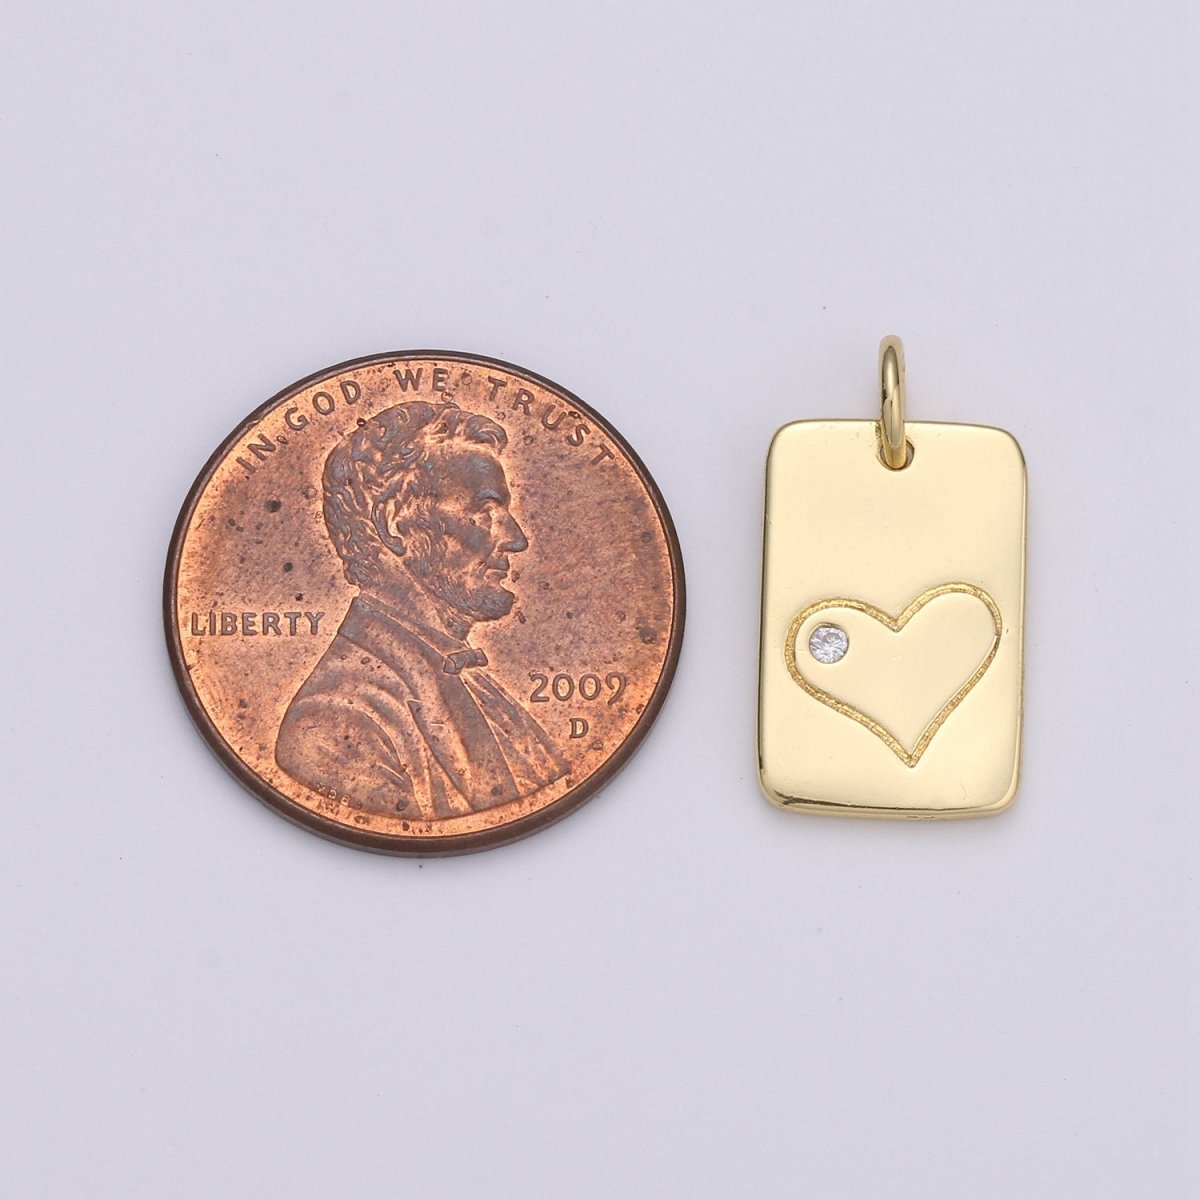 Dainty Heart Pendant - 10x18 Charm, Heart tag Pendant, Gold Filled Heart Medallion Charm Heart Charm Bracelet Earring Necklace D-515 - DLUXCA